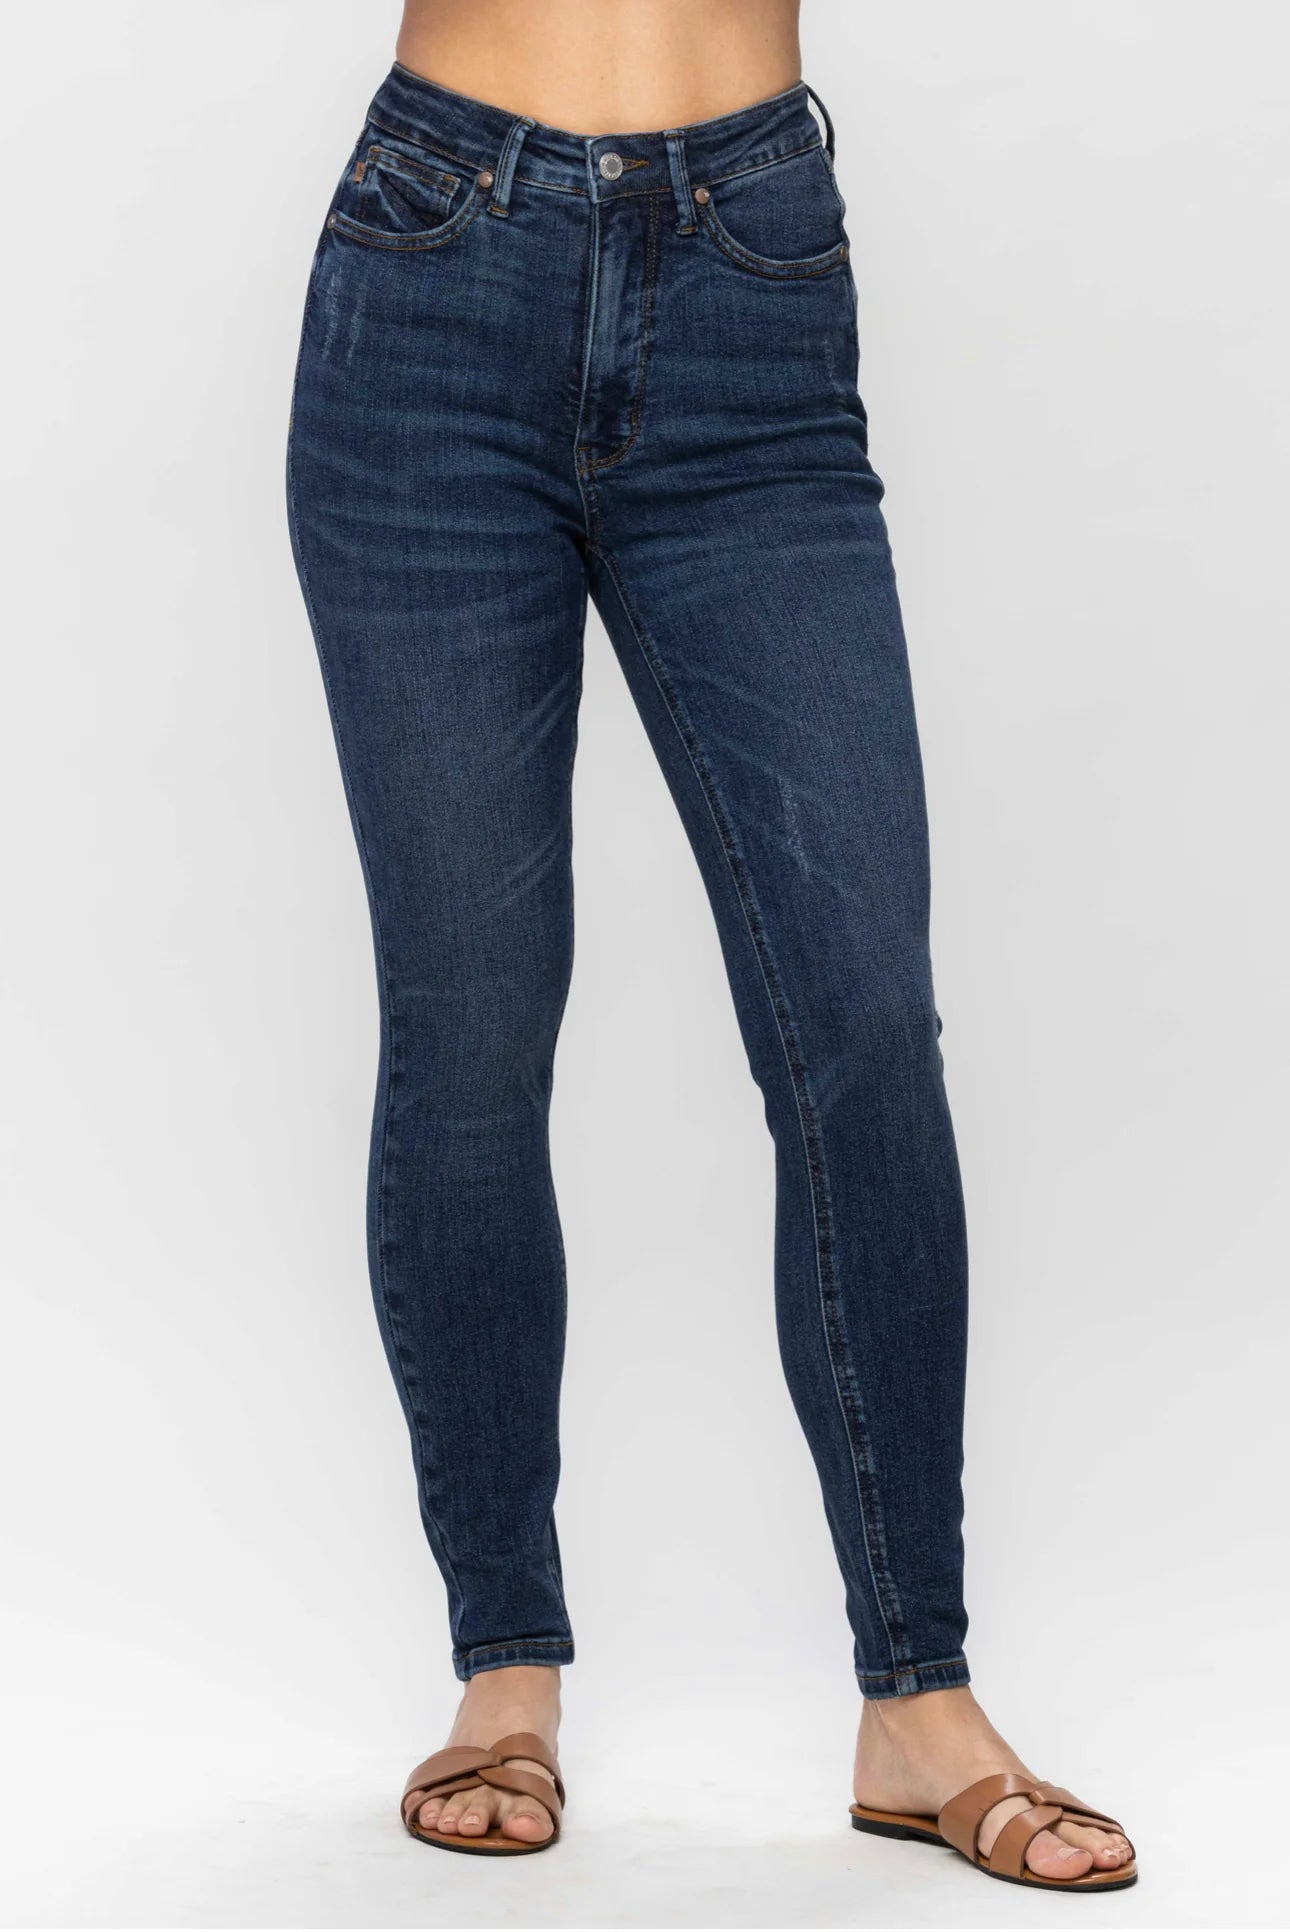 Judy Blue-TUMMY CONTROL Skinny Jeans